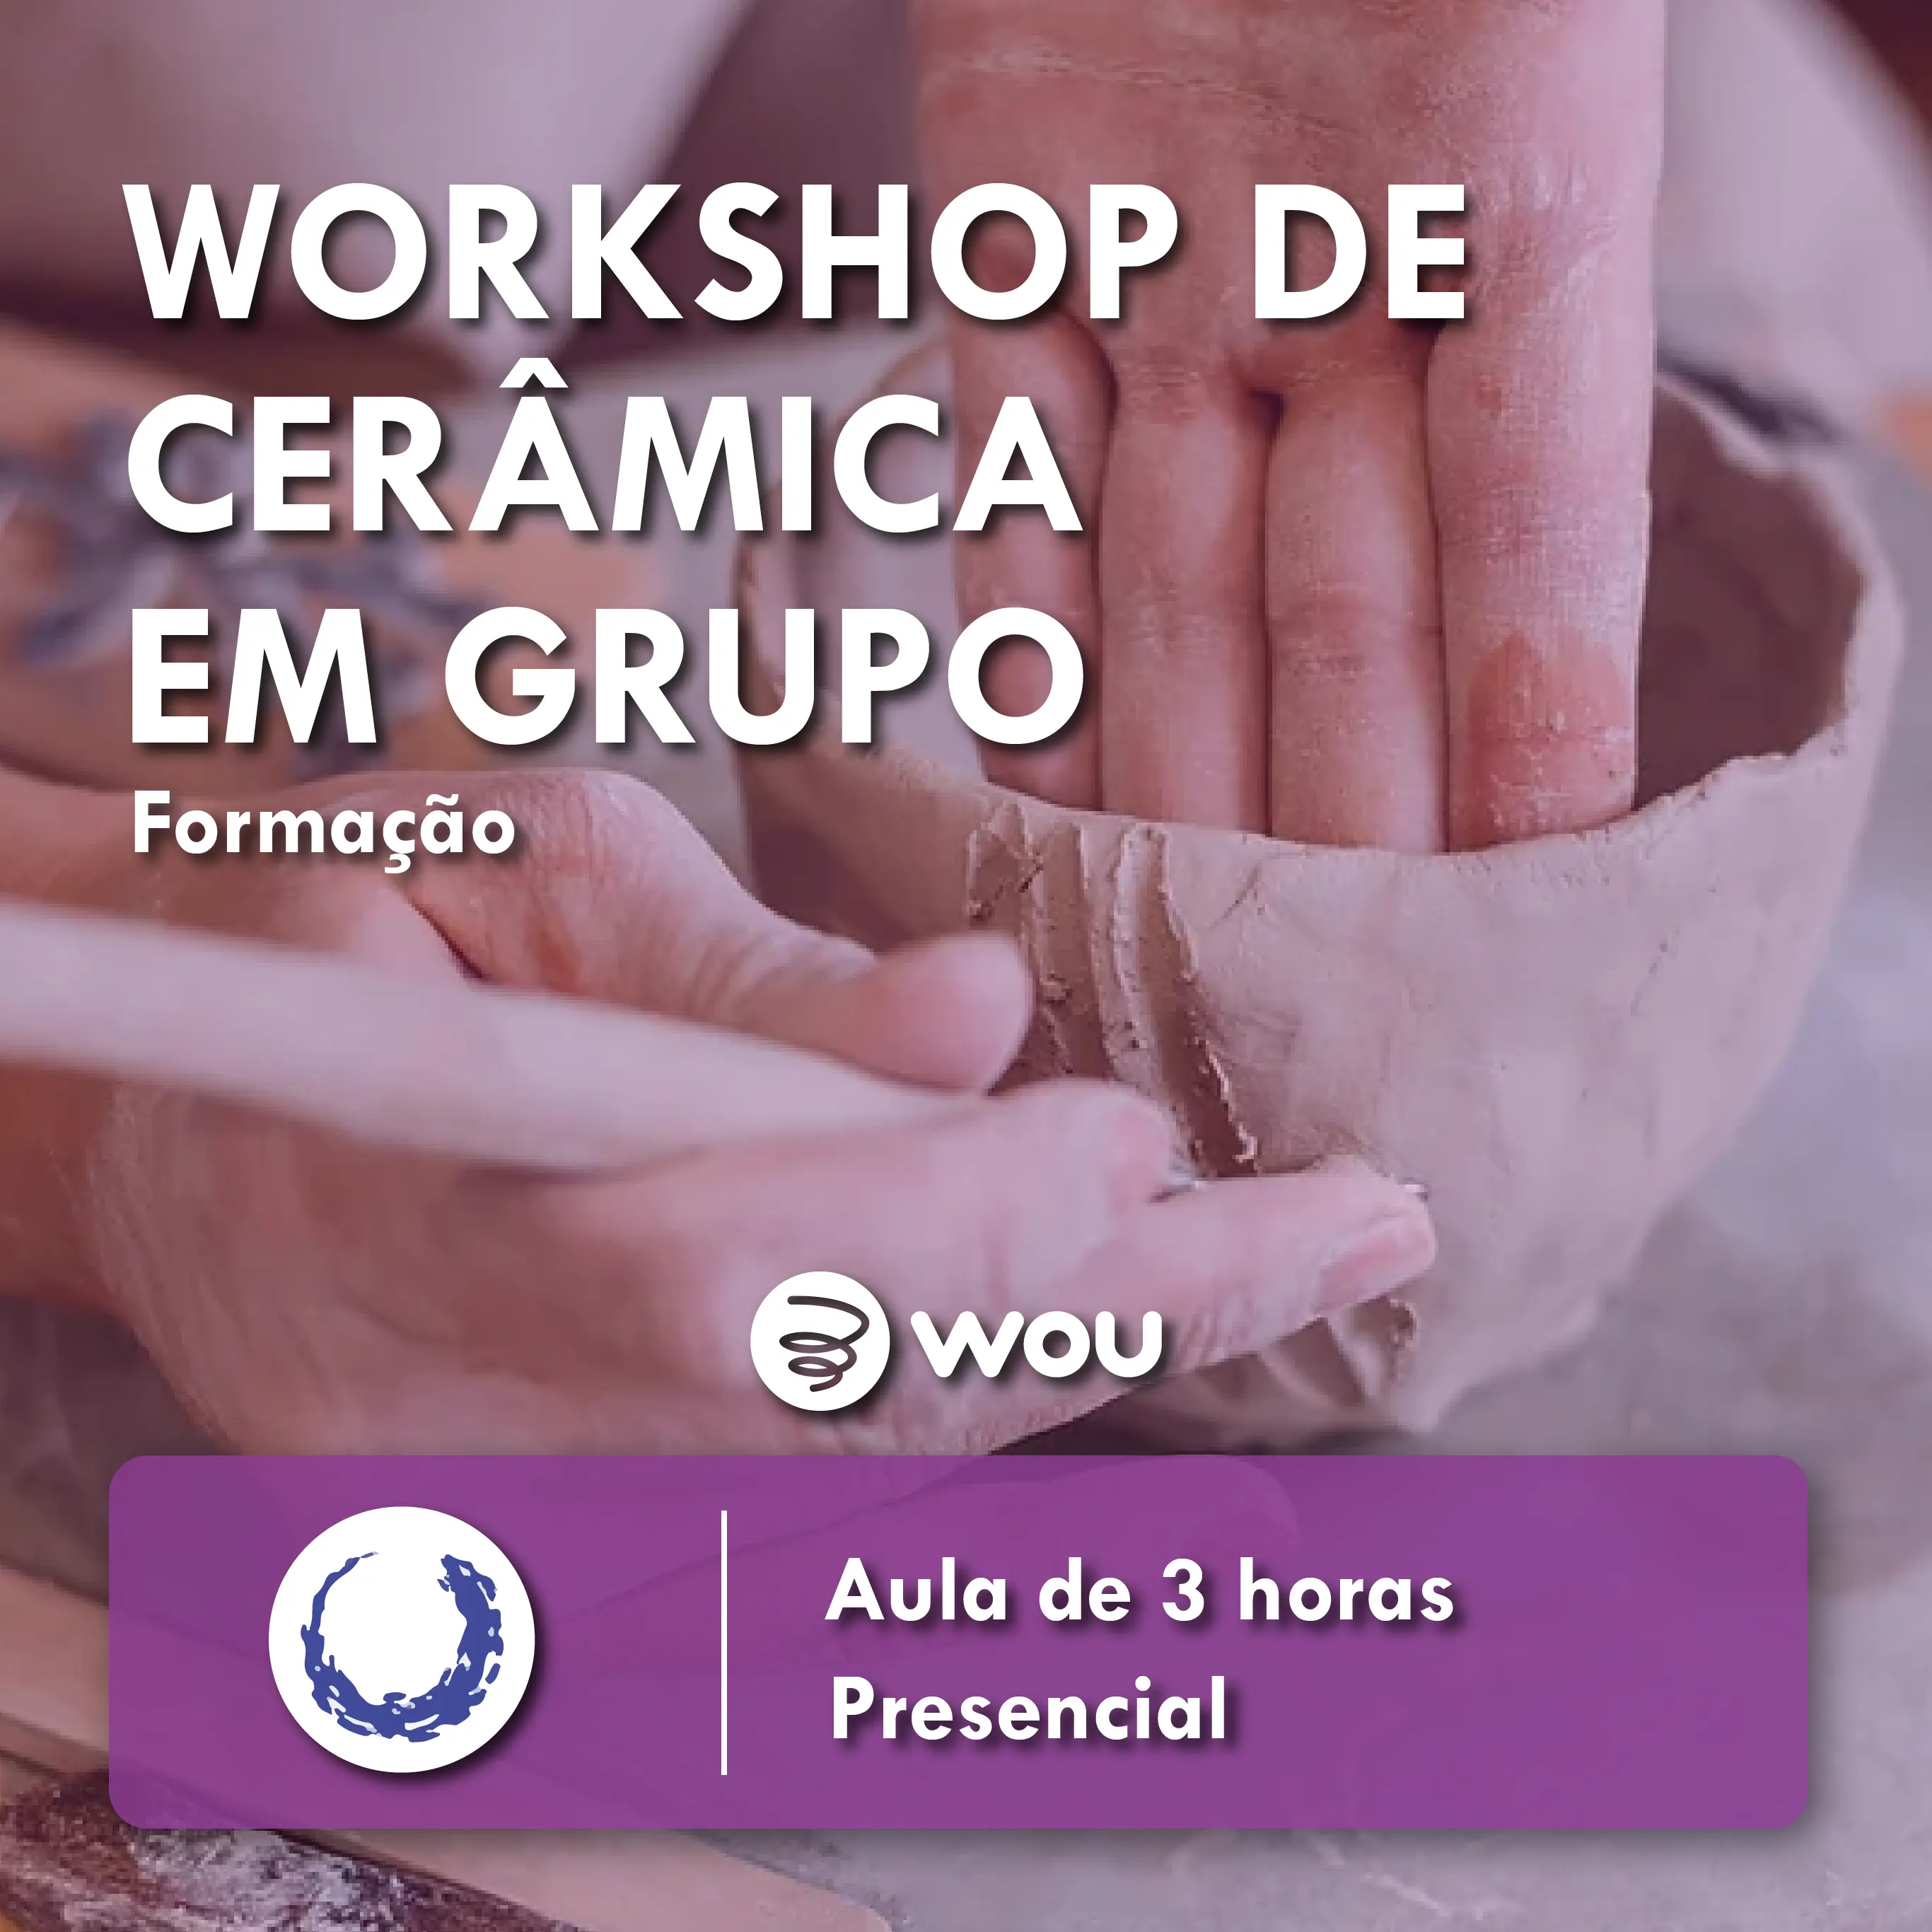 Group Ceramics Workshops in Braga